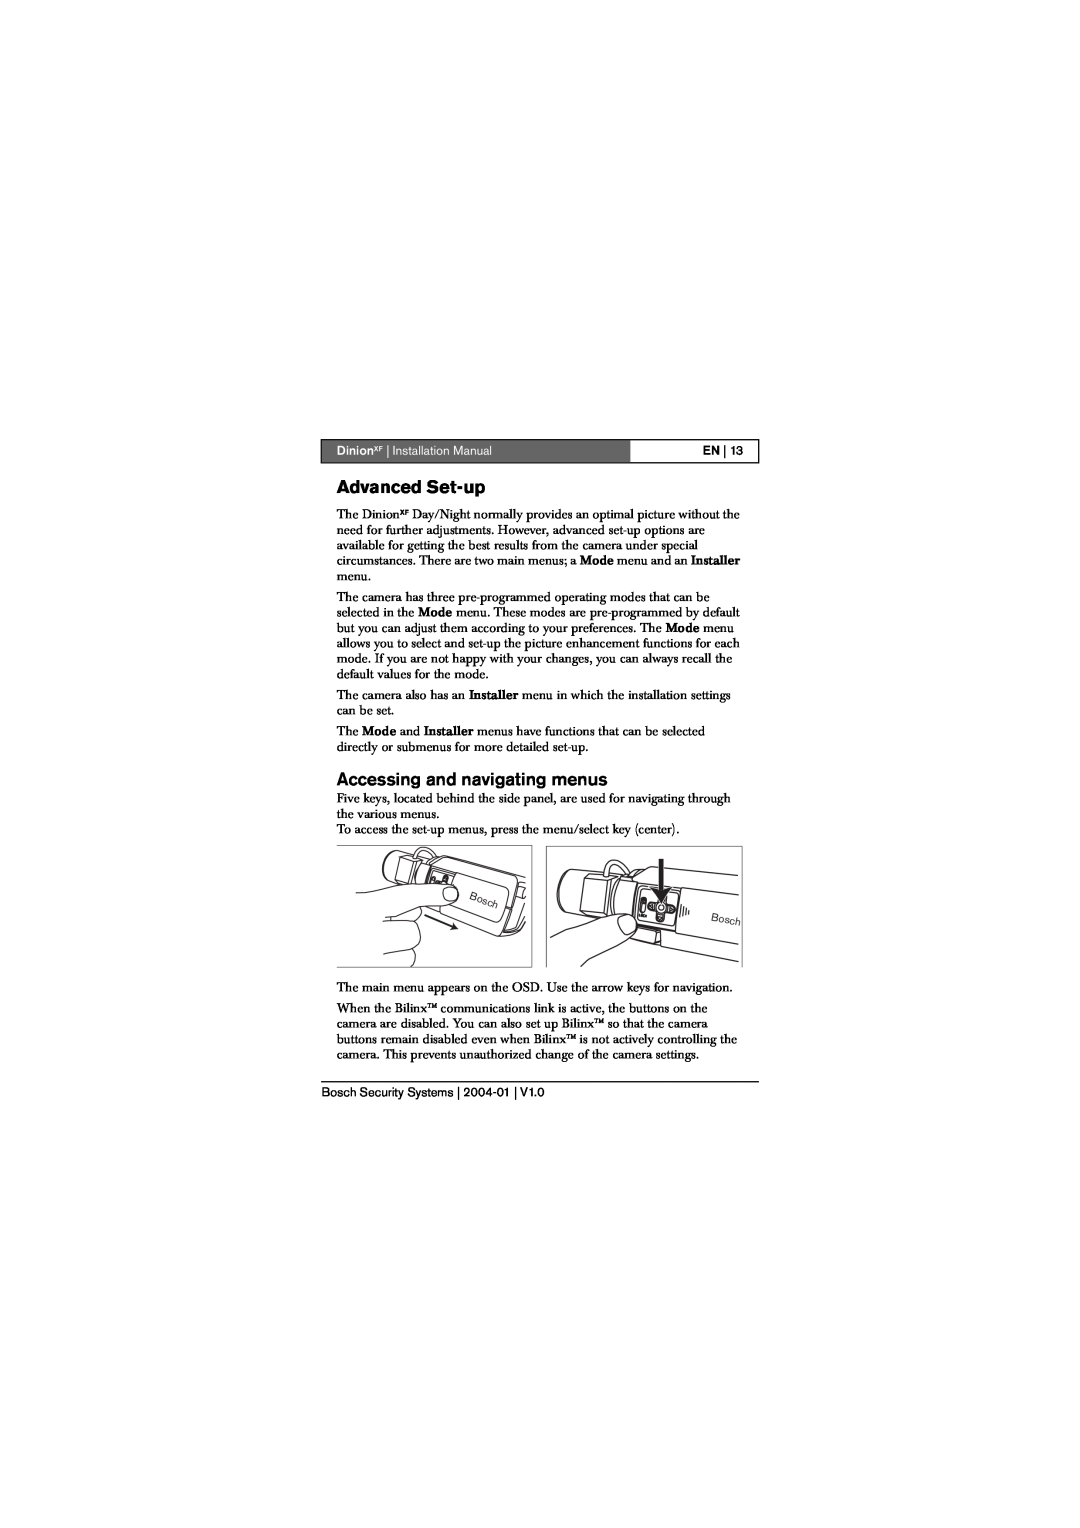 Bosch Appliances LTC 0620, LTC 0495 Advanced Set-up, Accessing and navigating menus, DinionXF Installation Manual 